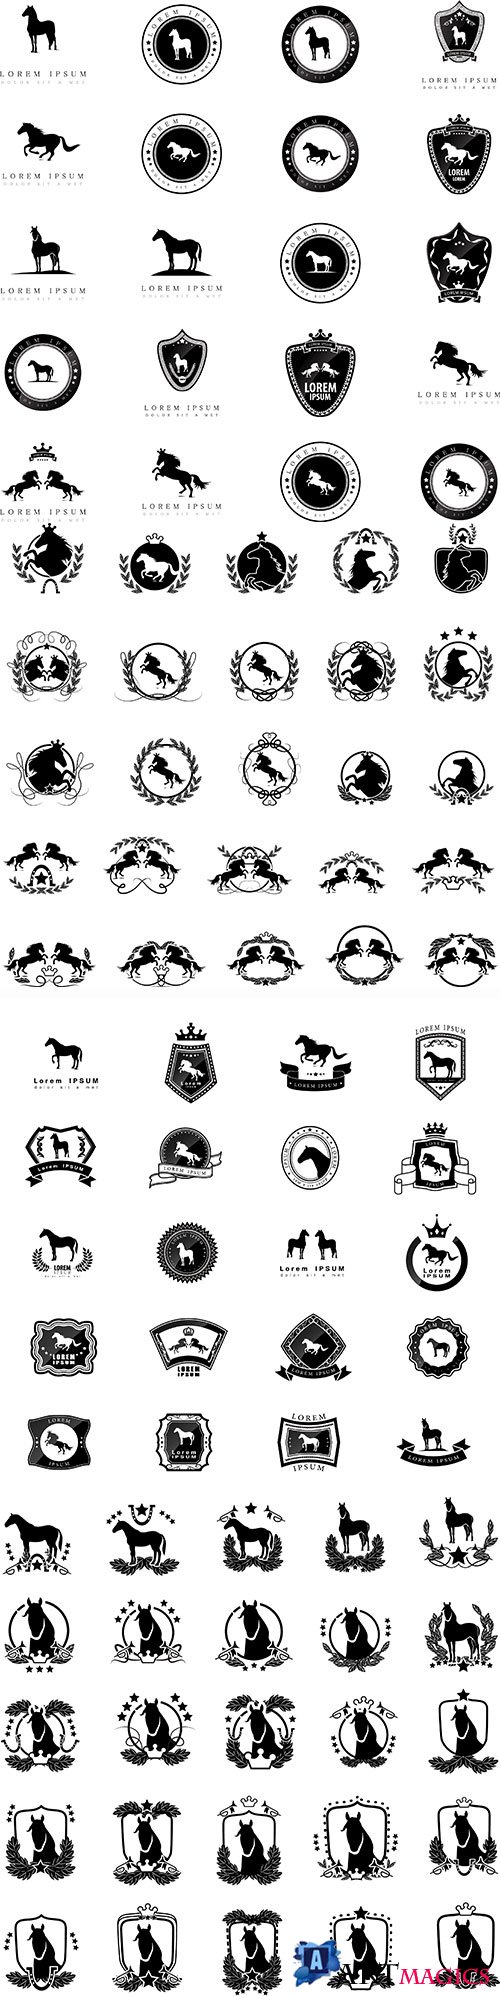 Horses - logos and emblems